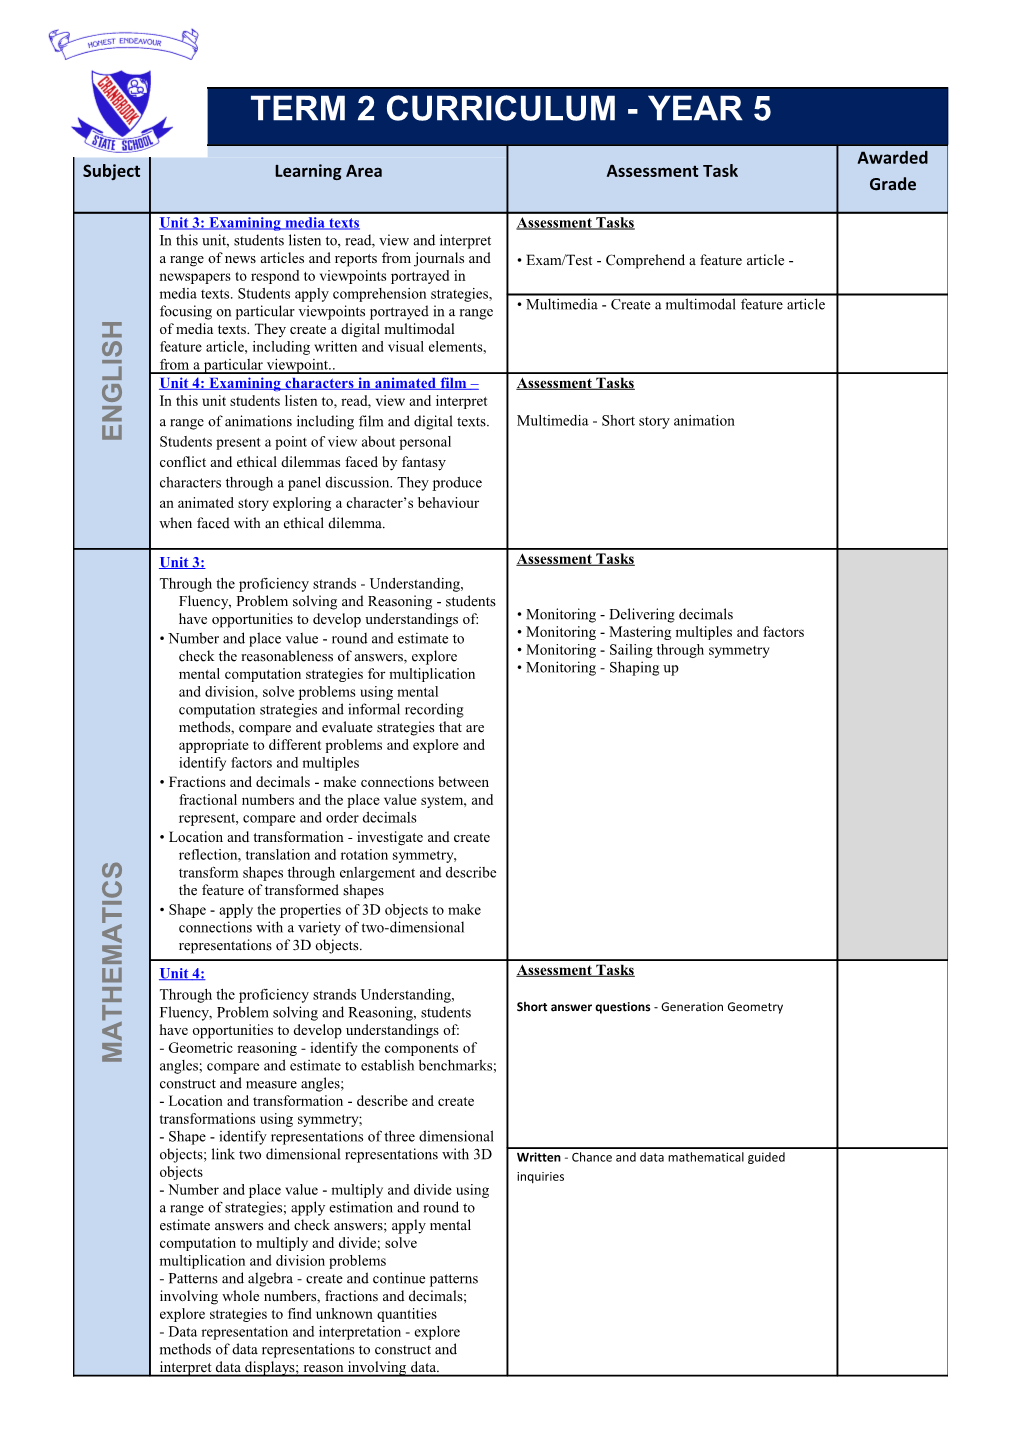 Teacher Checklist and Observation